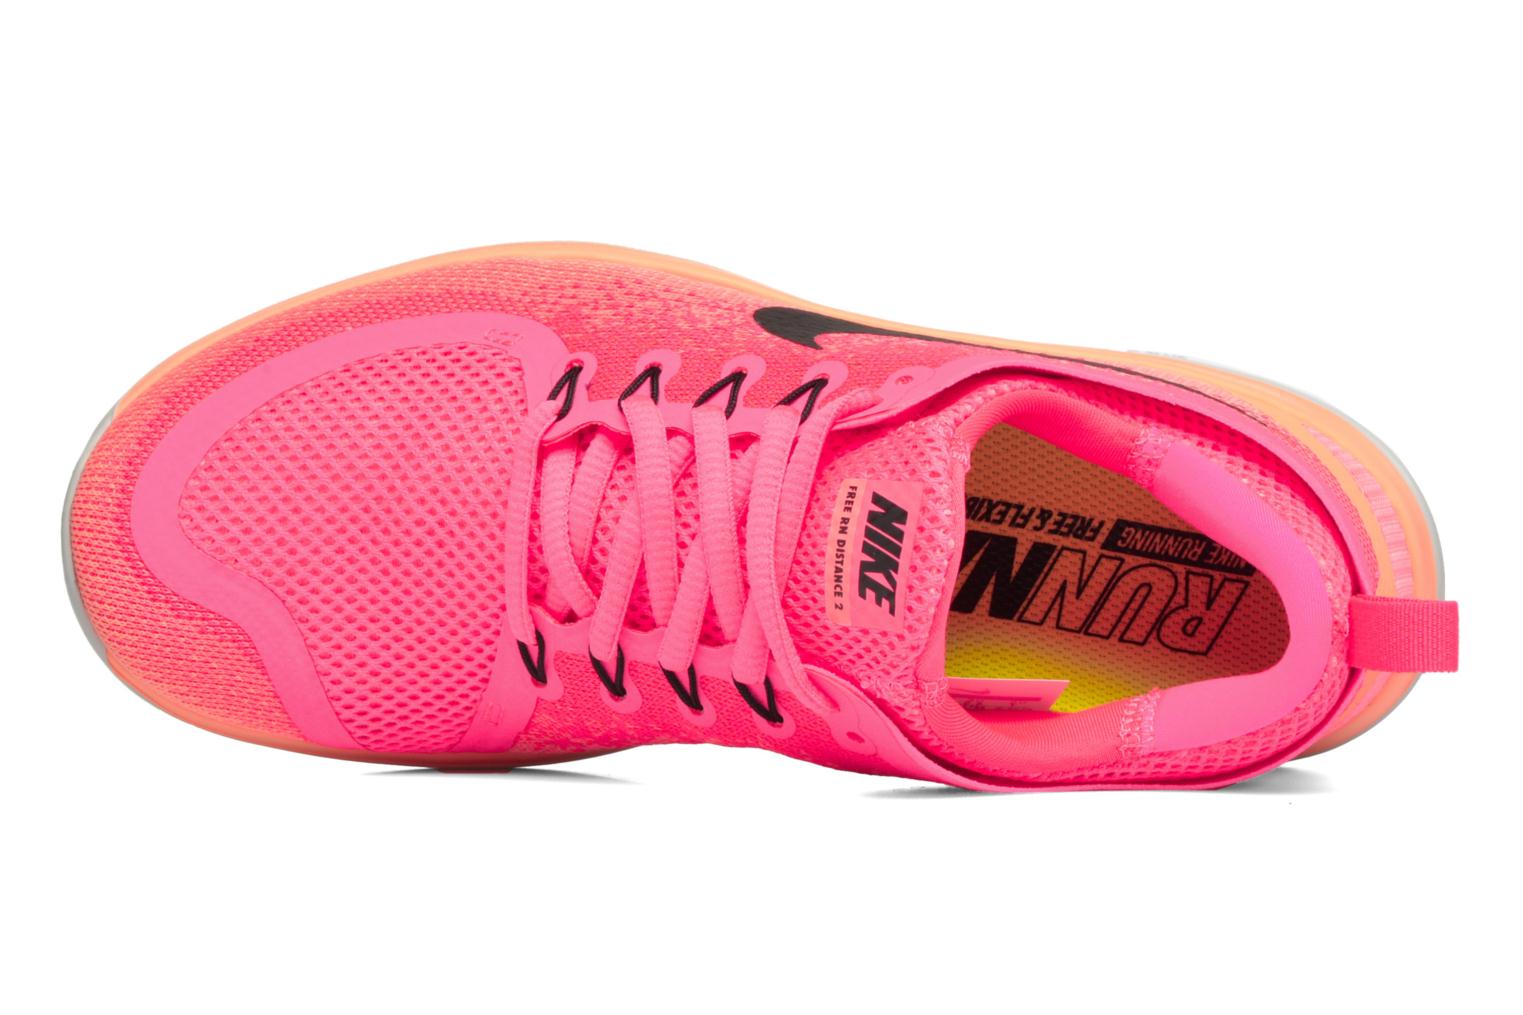 Nike Wmns Nike Free Rn Distance 2 (Pink) - Sport shoes chez Sarenza ...